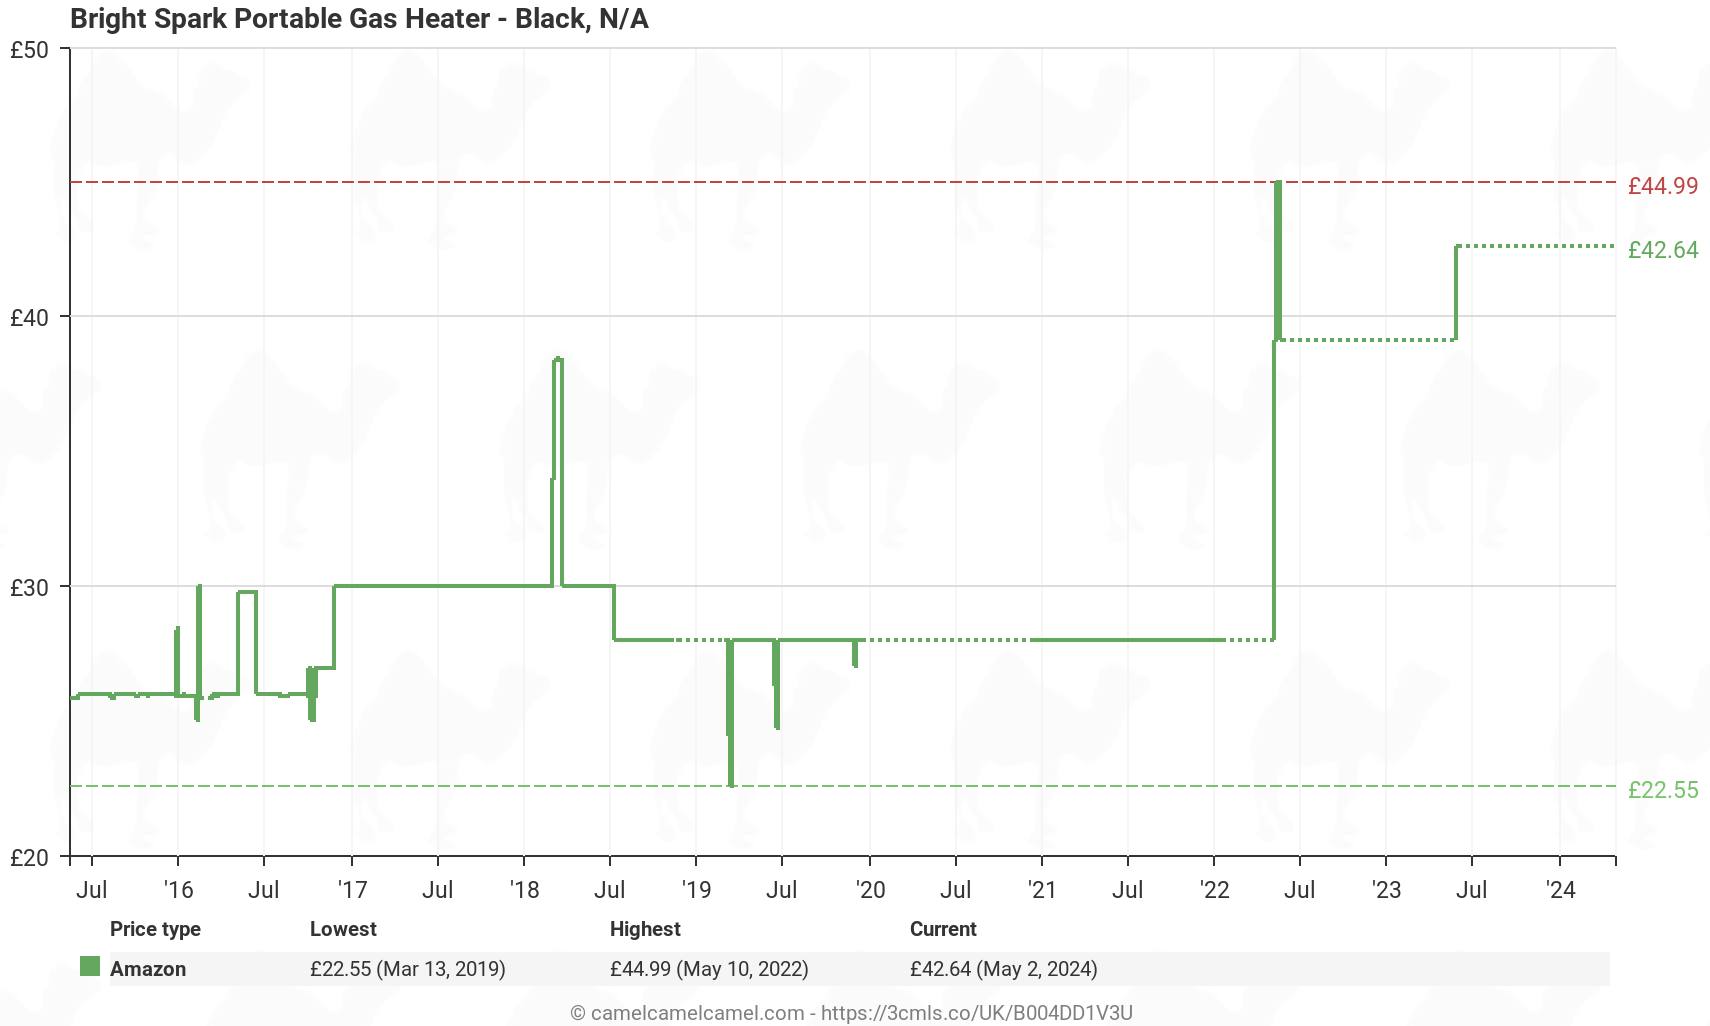 Bright Spark Portable Gas Heater - Black, N/A - Price History: B004DD1V3U